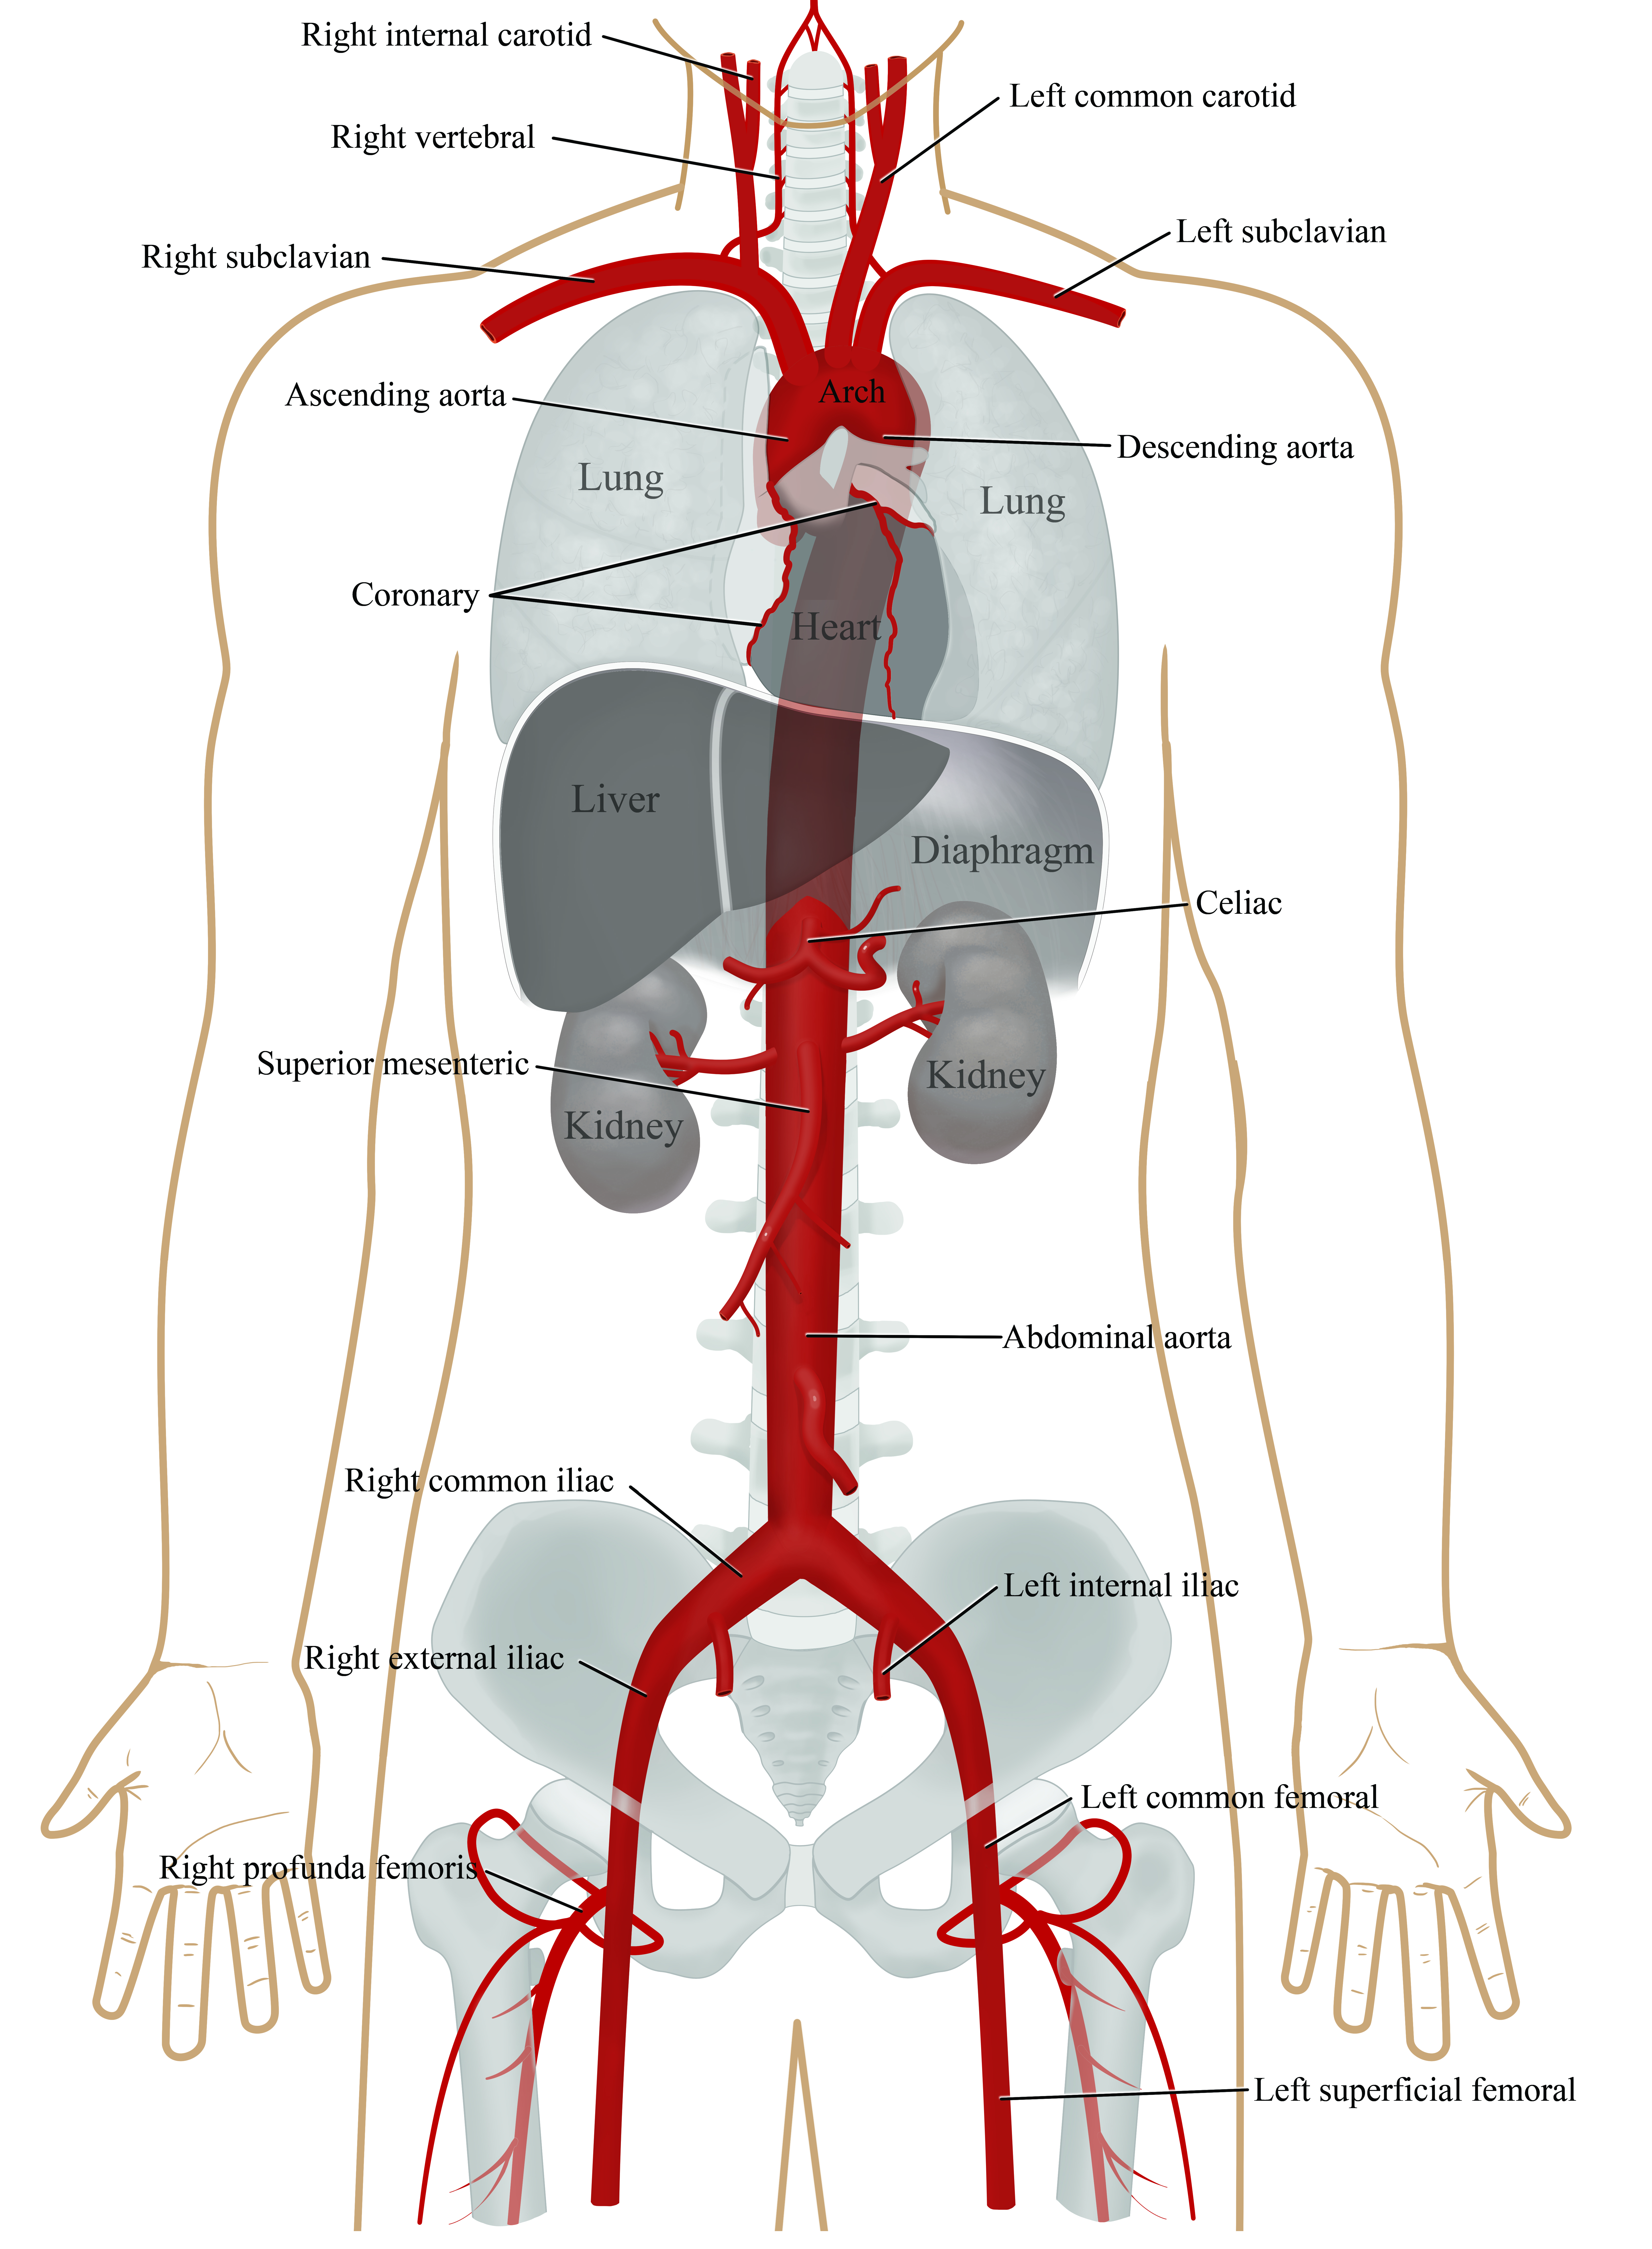 Aorta Anatomy | UF Health Aortic Disease Center|Diseases & Treatment